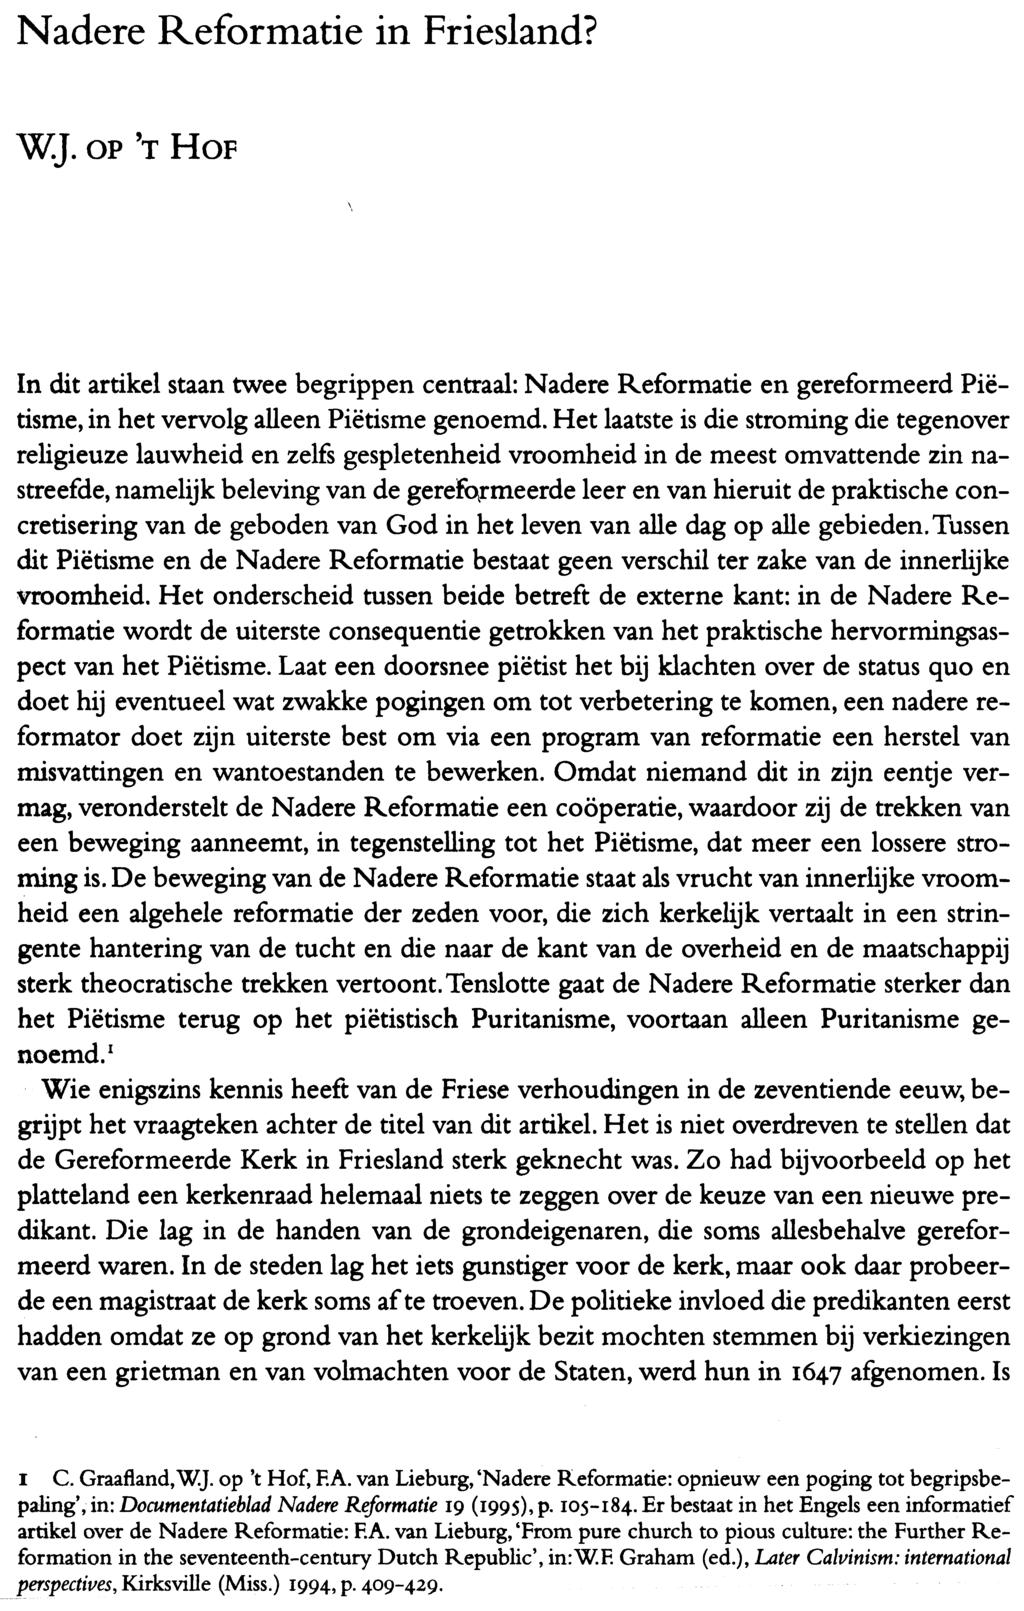 Nadere Reformatie in Friesland? WJ. OP 'T HOF In dit artikel staan twee begrippen centraal: Nadere Reformatie en gereformeerd Piëtisme, in het vervolg alleen Piëtisme genoemd.